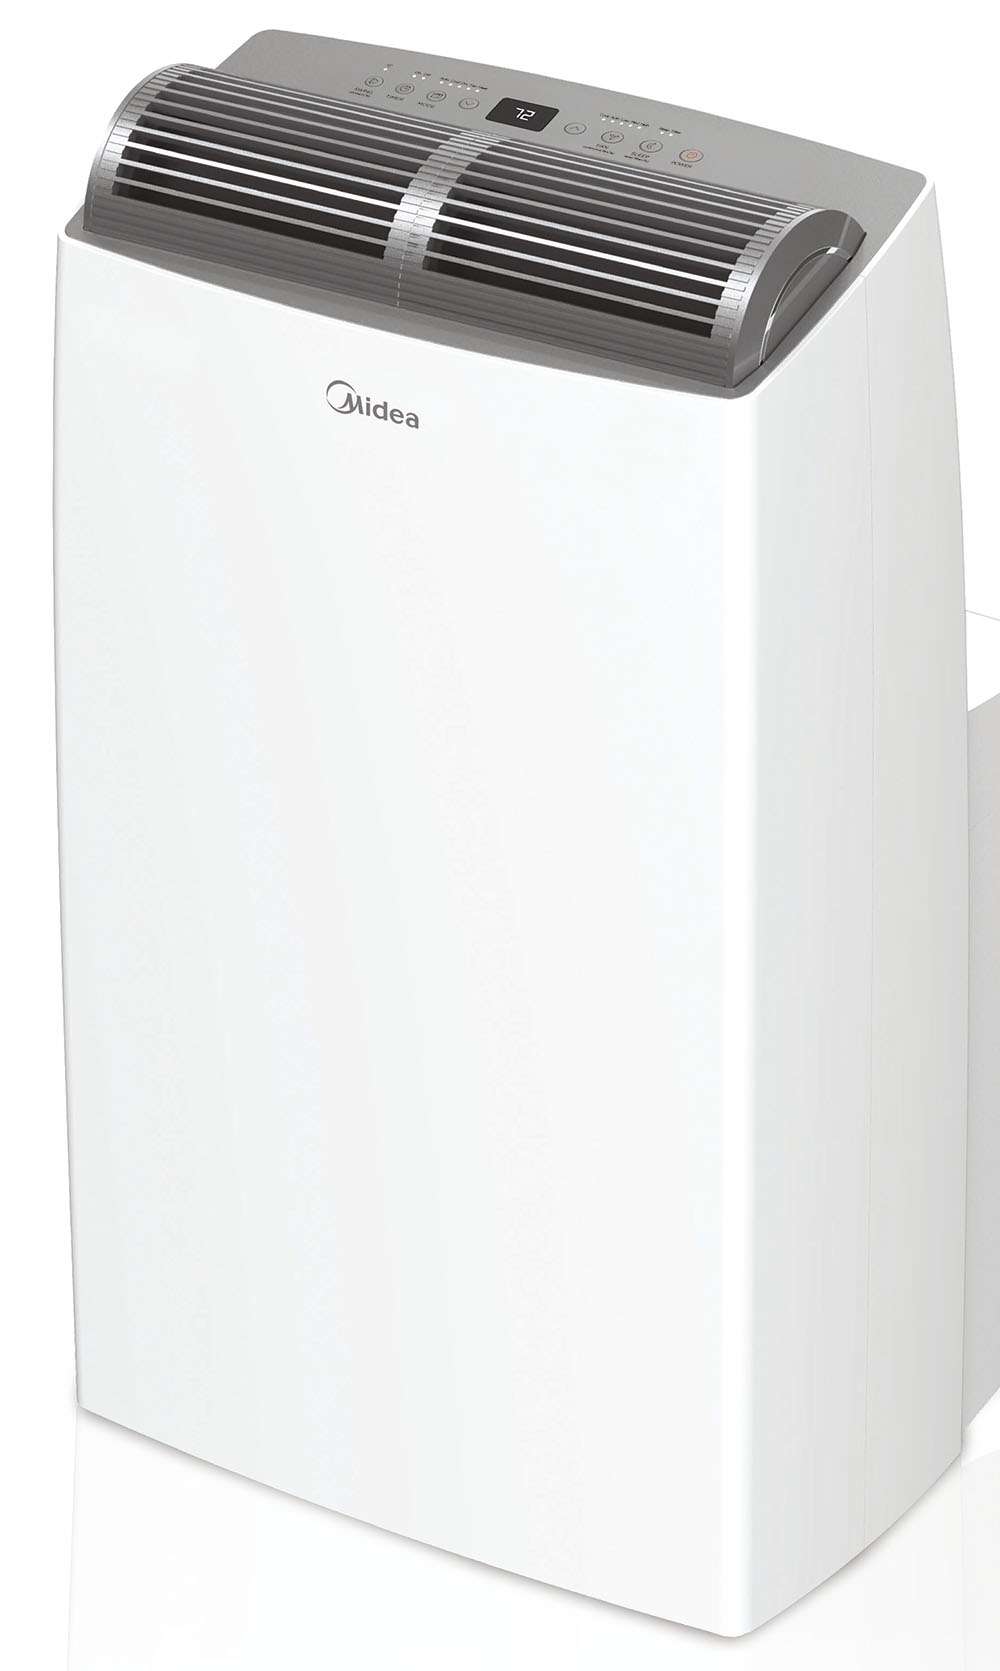 Midea DUO 12,000 BTU SACC Smart Inverter Portable Air Conditioner with Heat, White